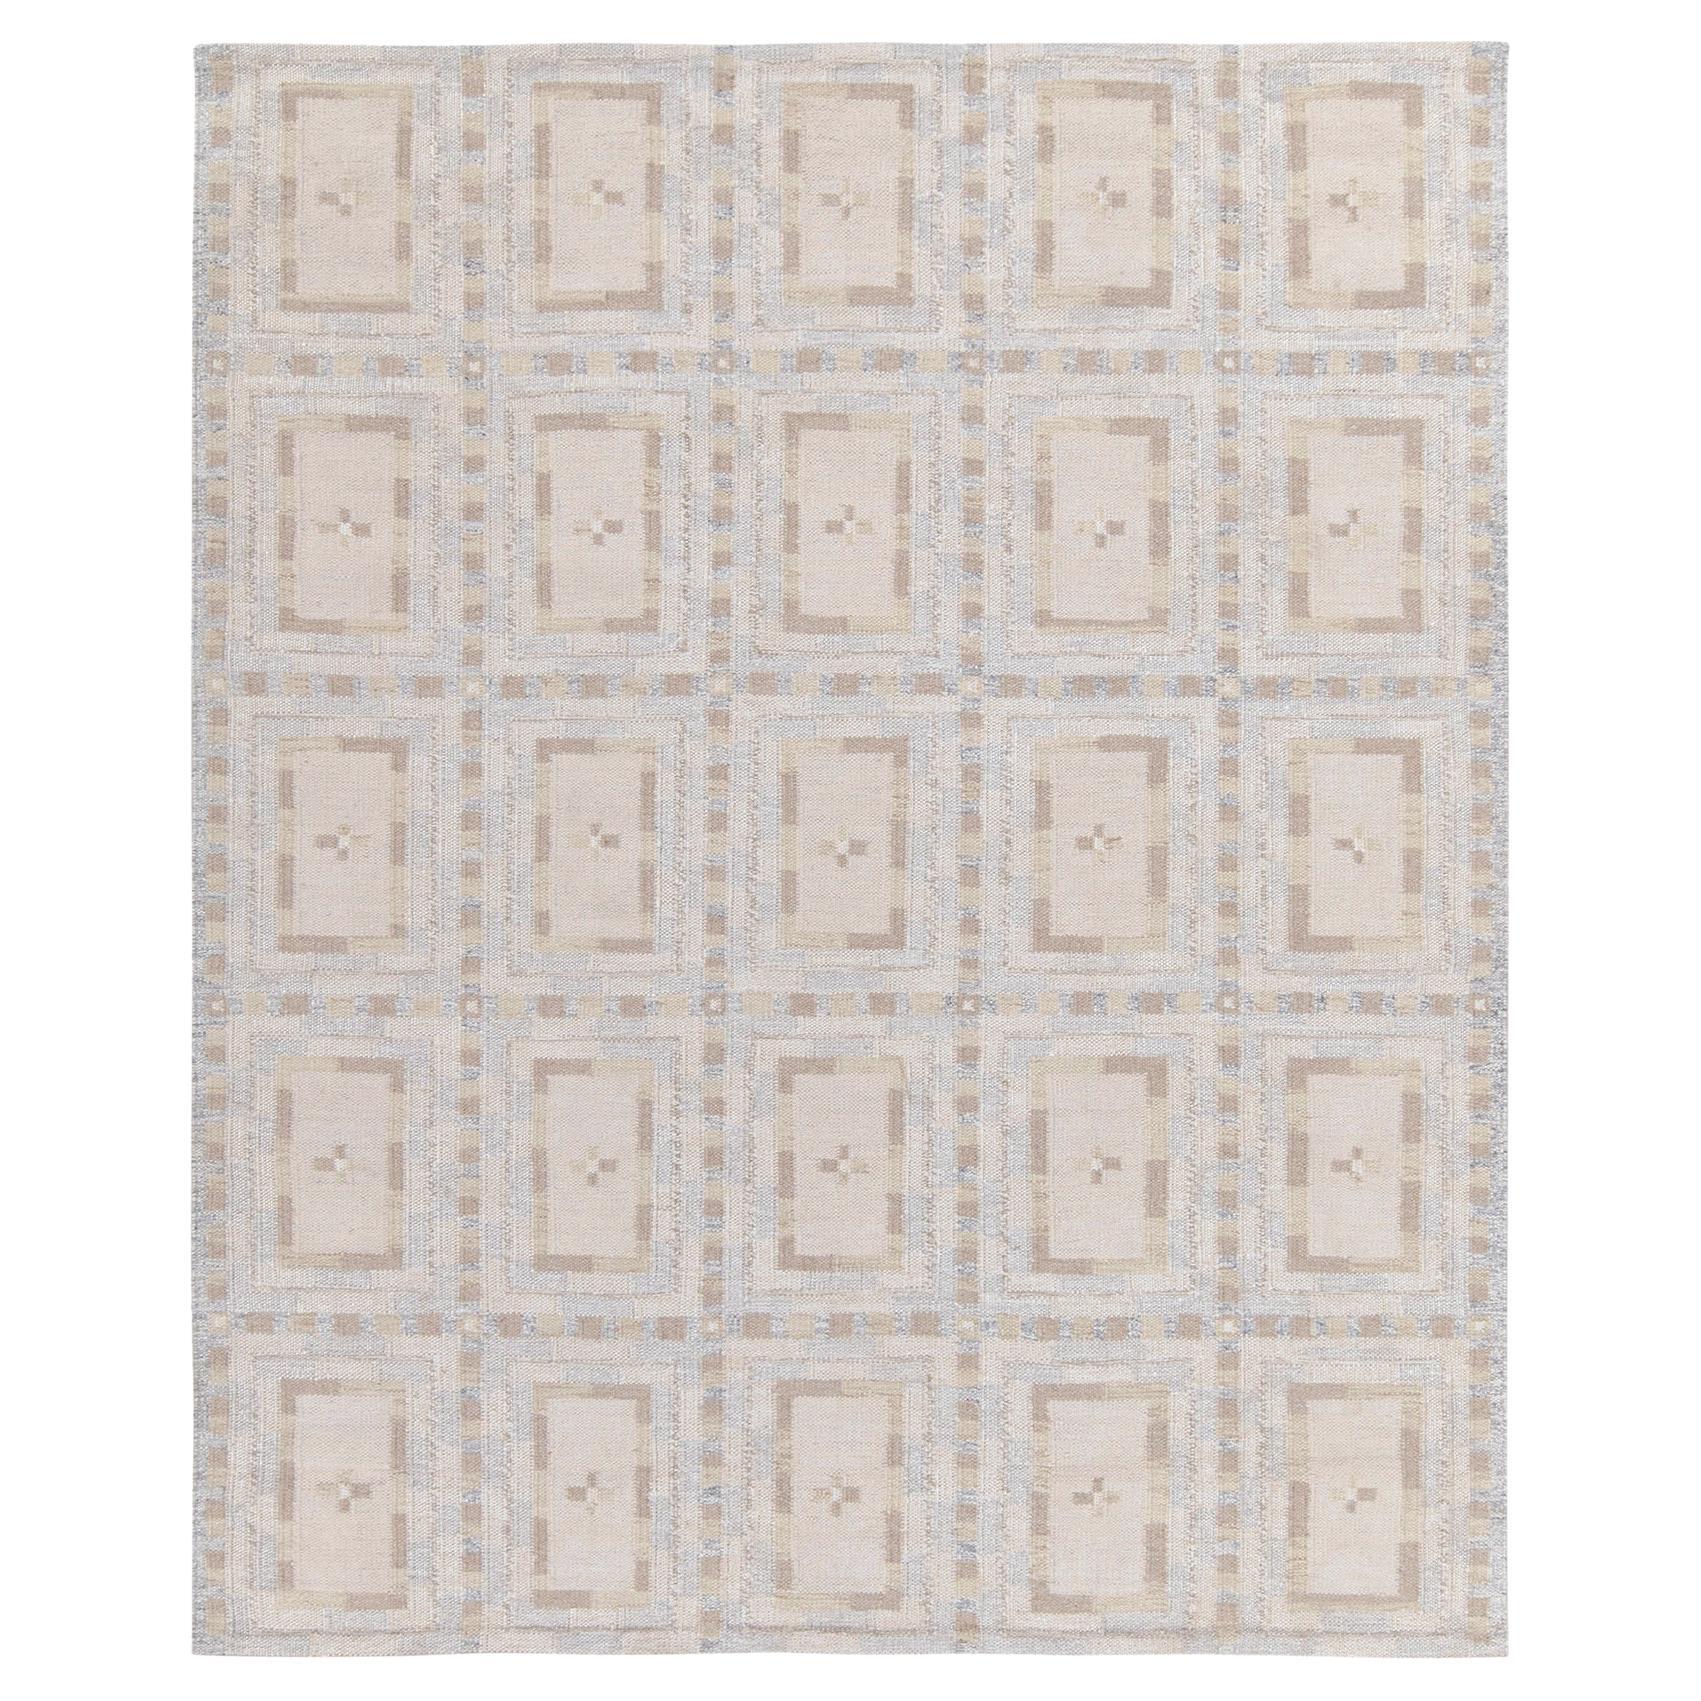 Scandinavian Style Kilim Rug in White, Beige Geometric Pattern by Rug & Kilim For Sale